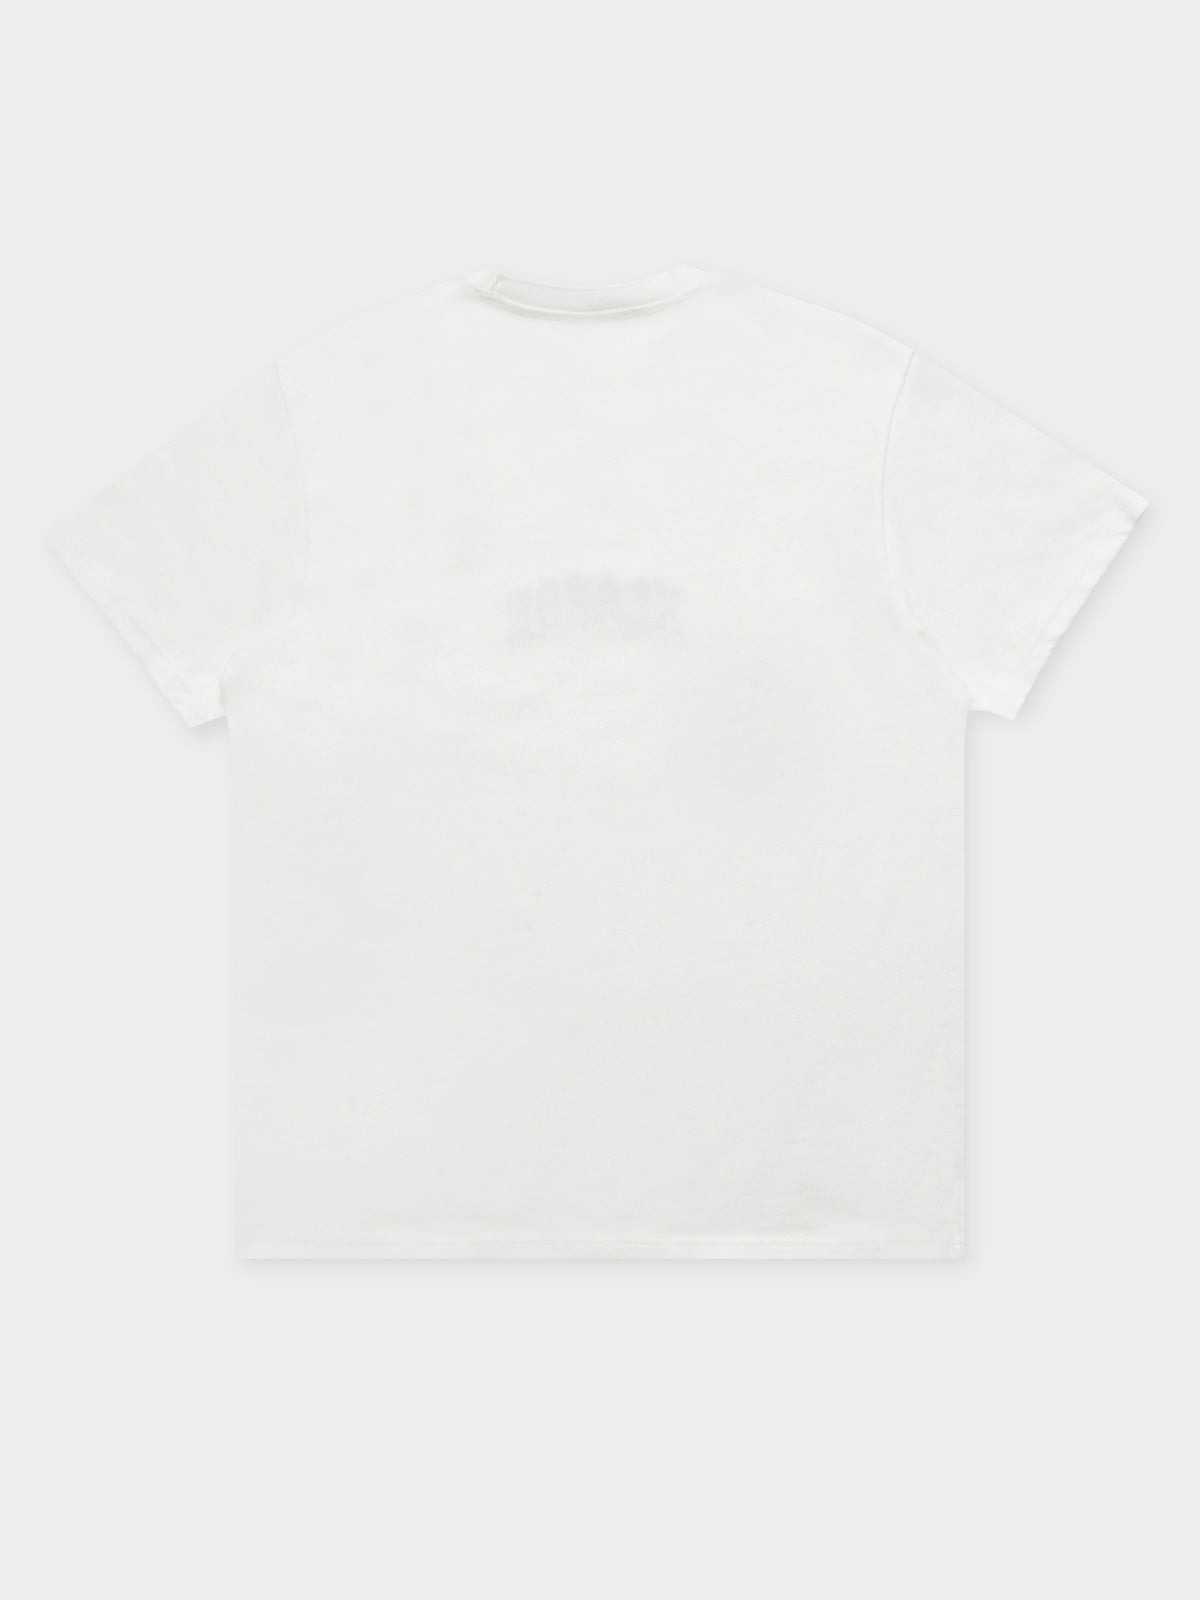 LA Baseball T-Shirt in White